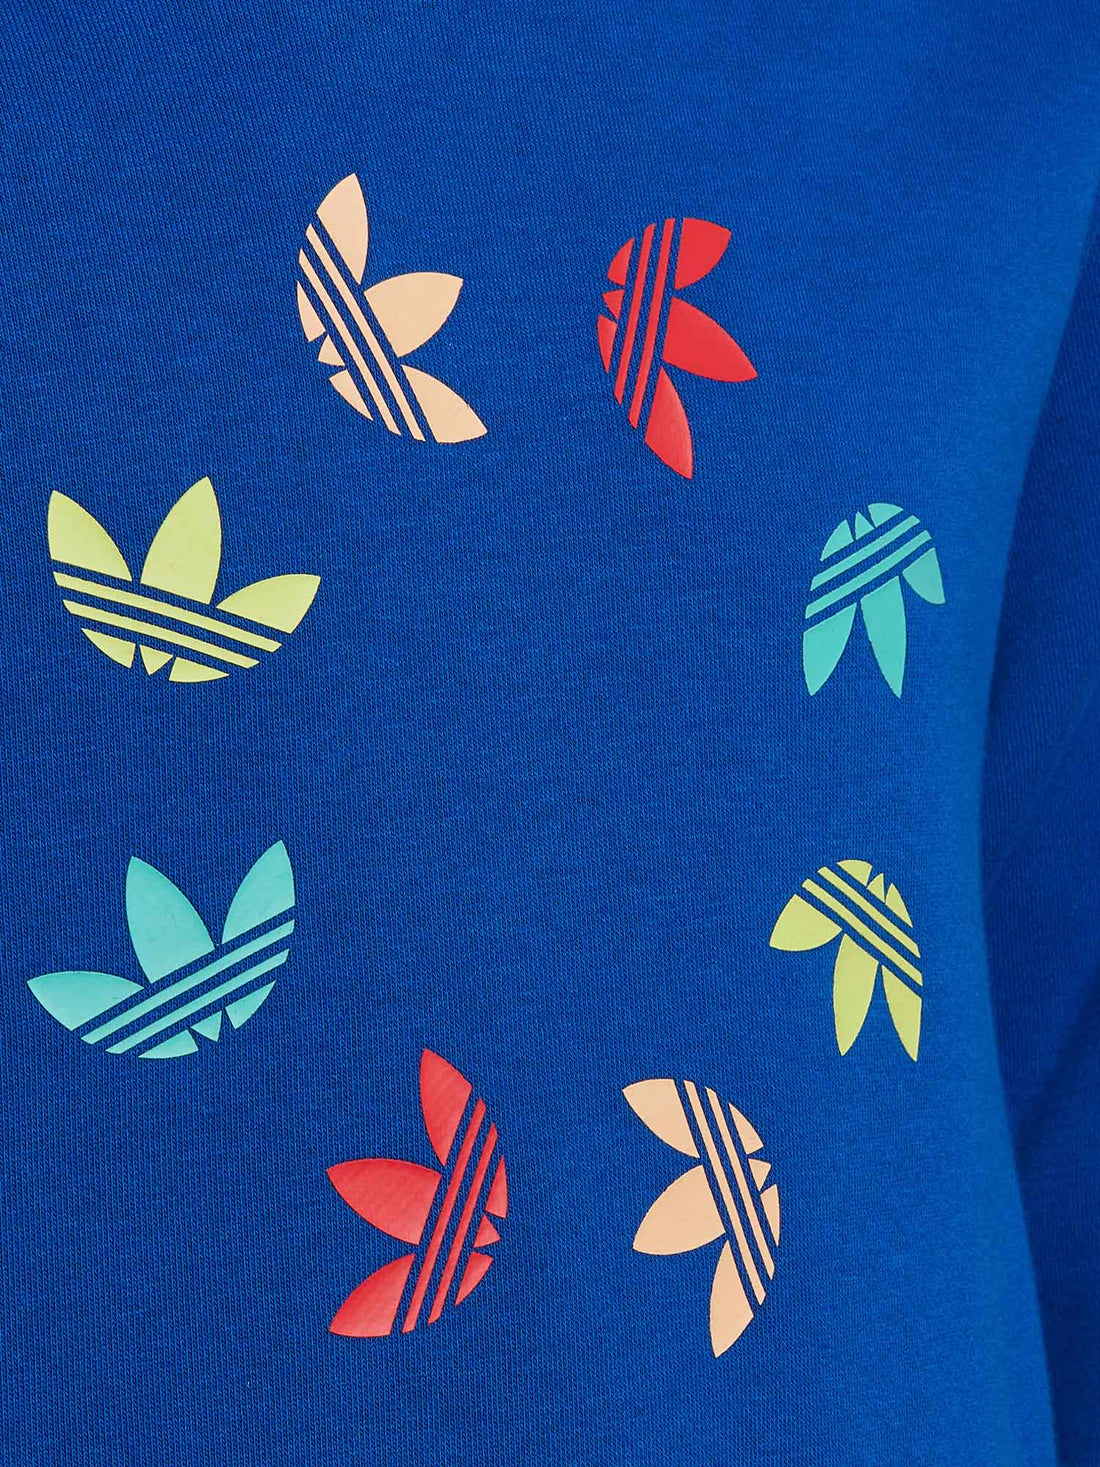 Felpe Blu Adidas Originals